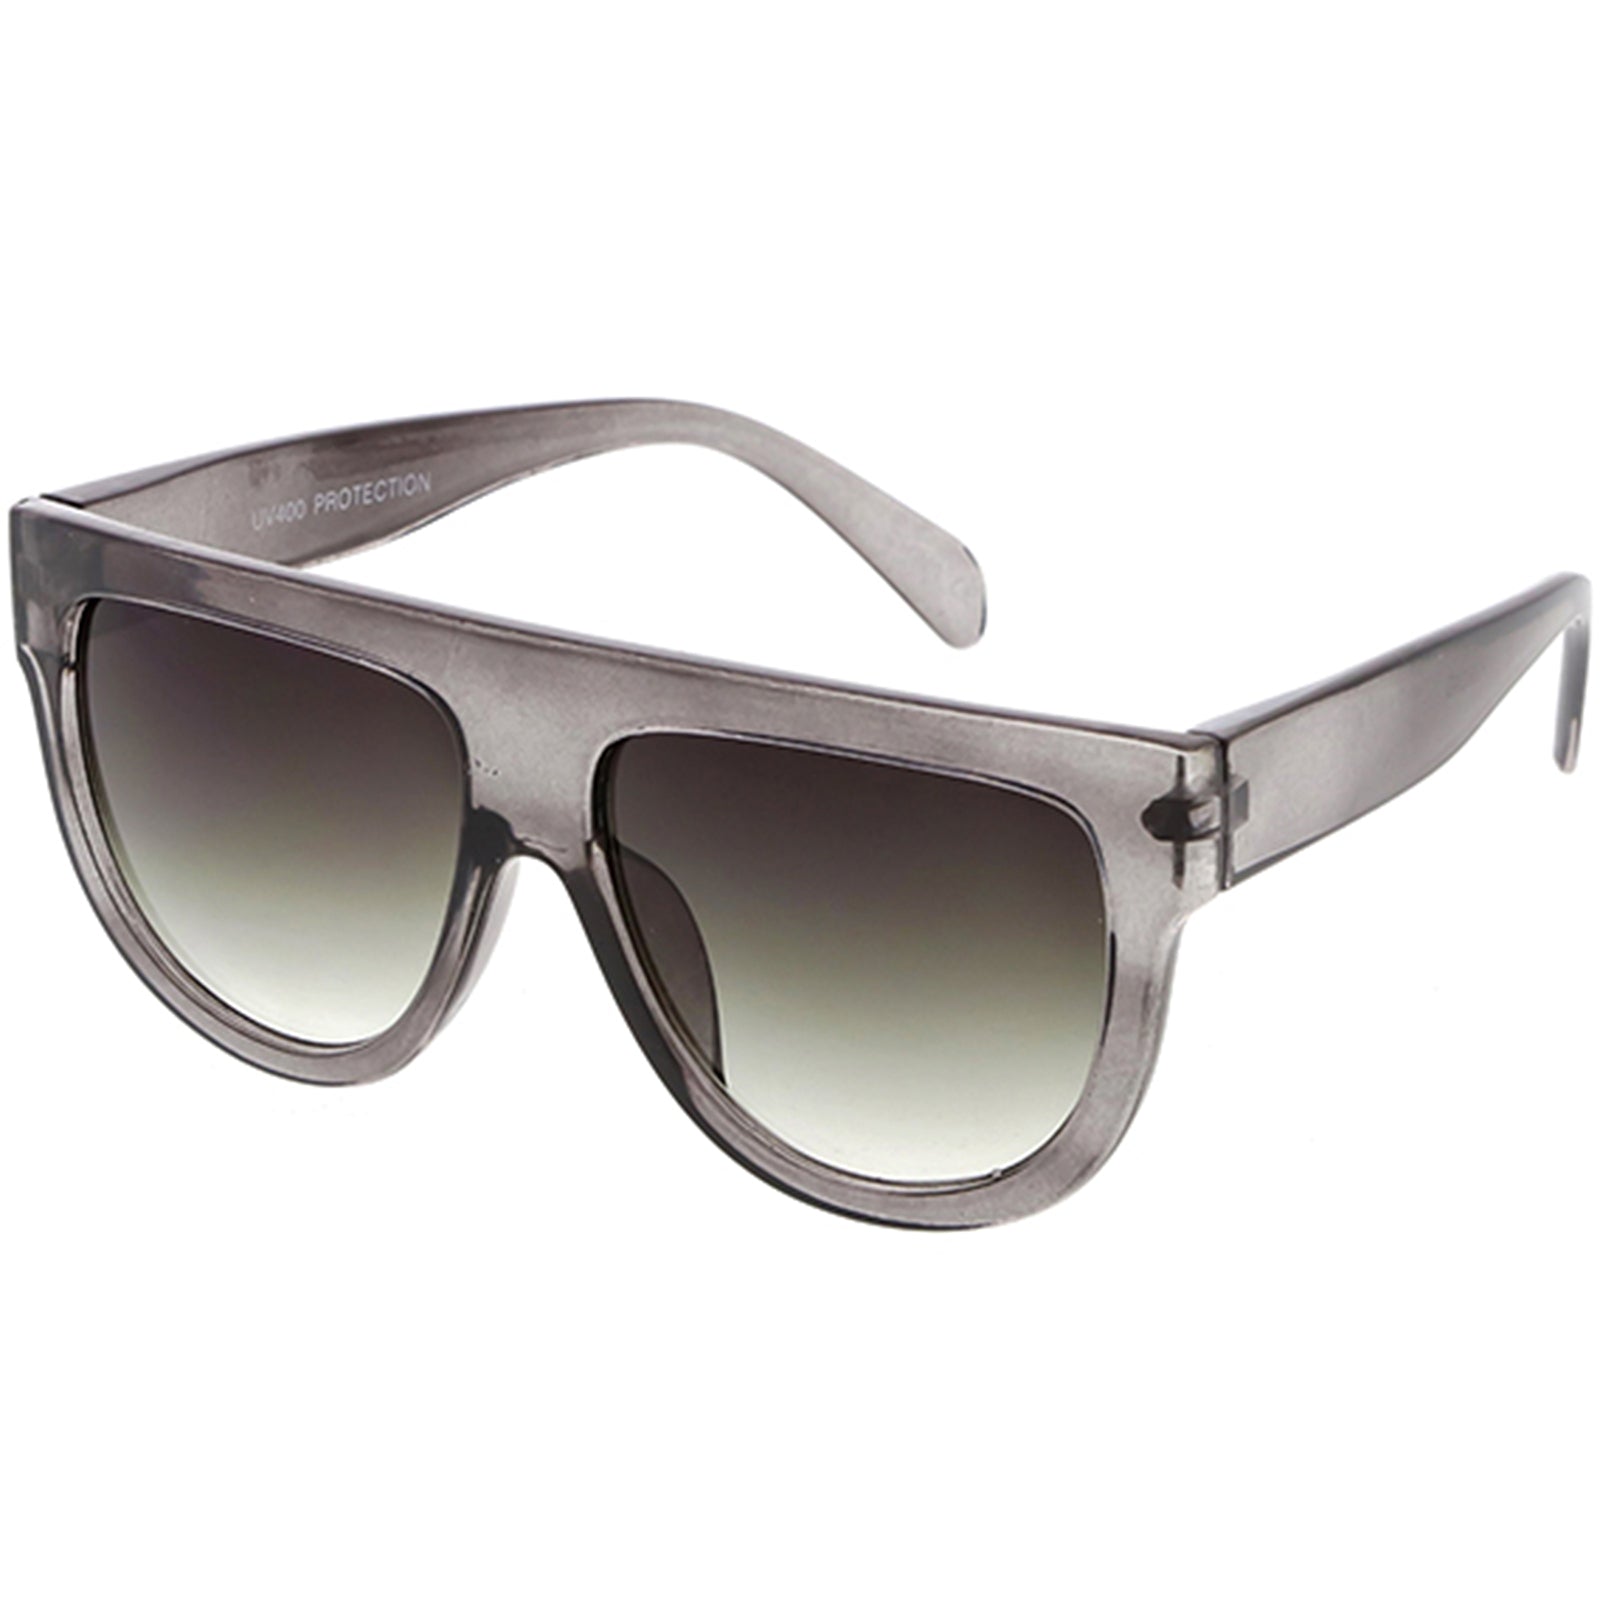 Kids Glam Flat Top Round Oversize Sunglasses 50mm